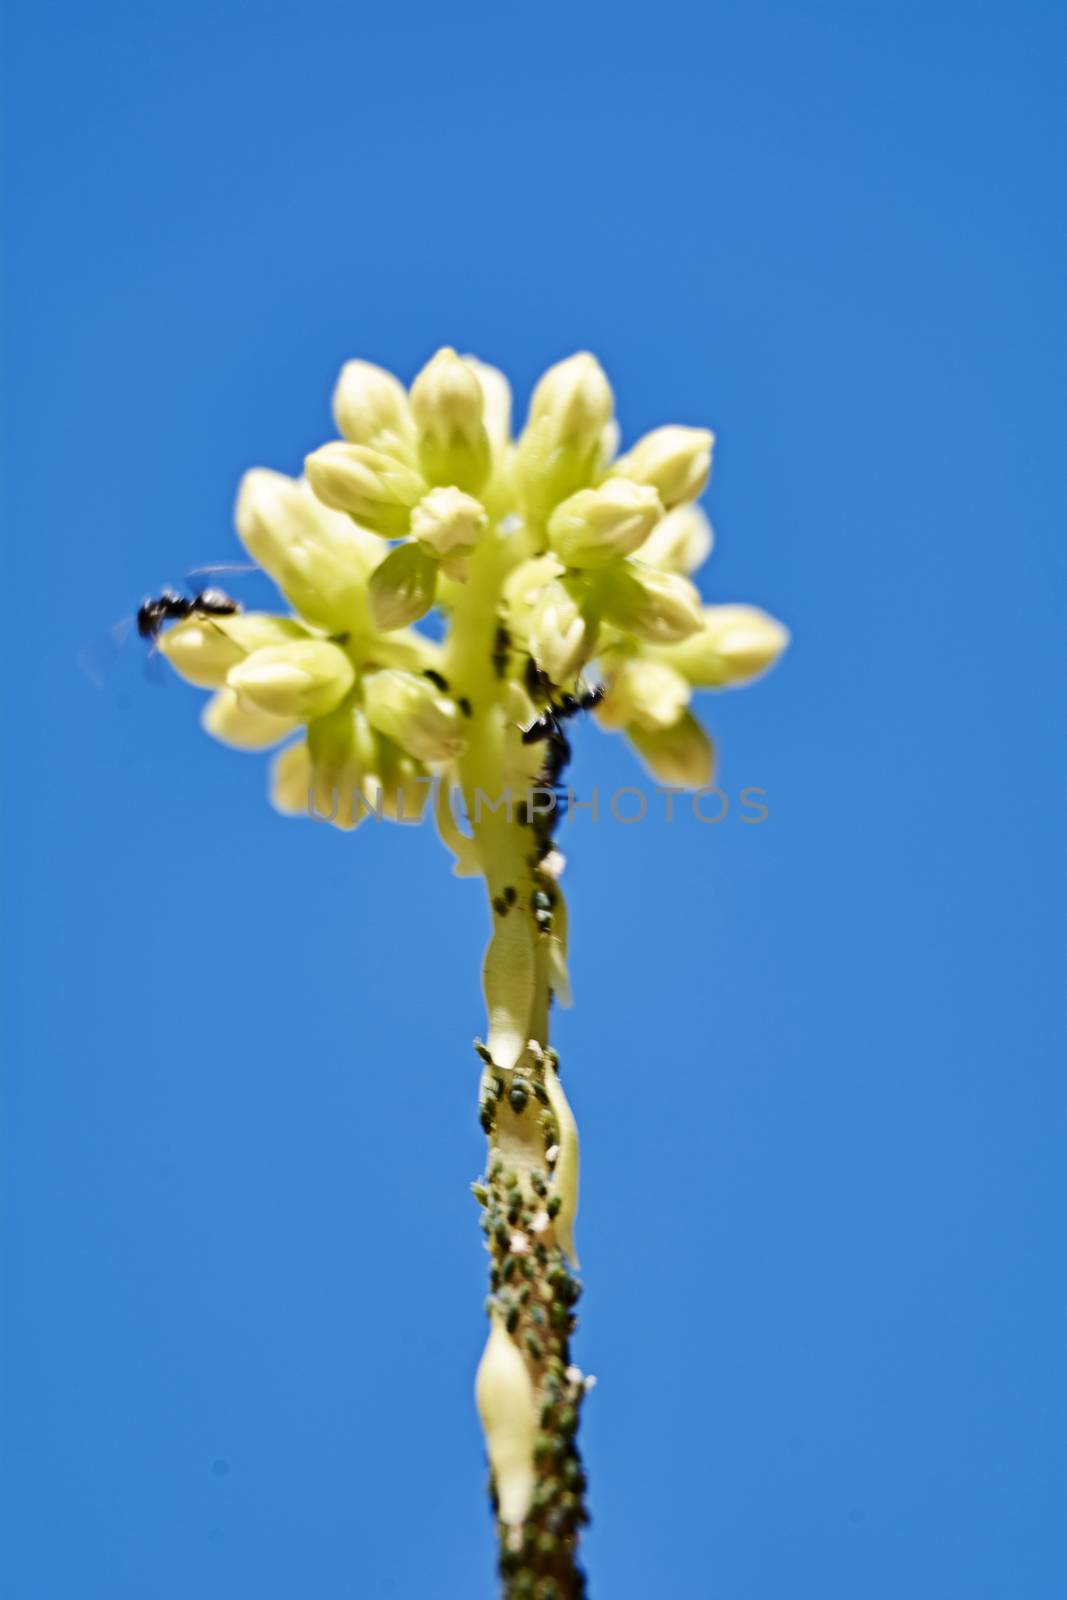 Little ants climbing up a yellow flower by raul_ruiz